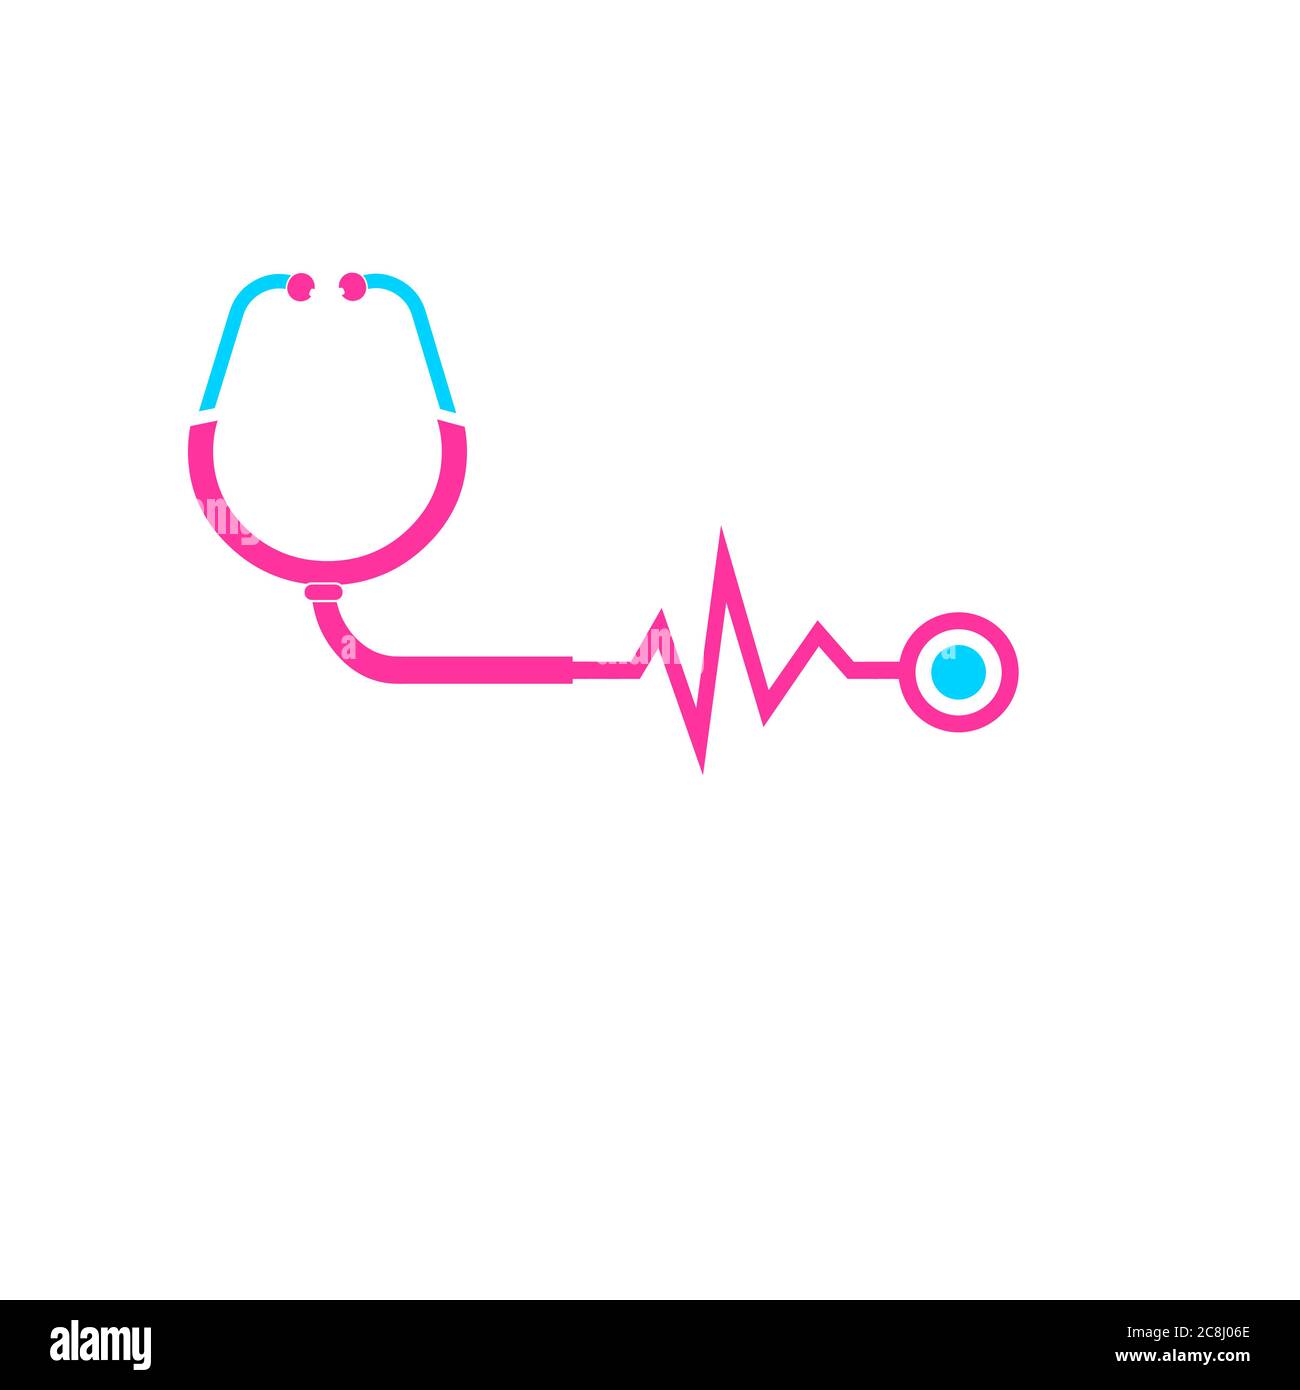 Stethoscope illustration vector design logo healthcare and medical symbols doctors sign Stock Vector